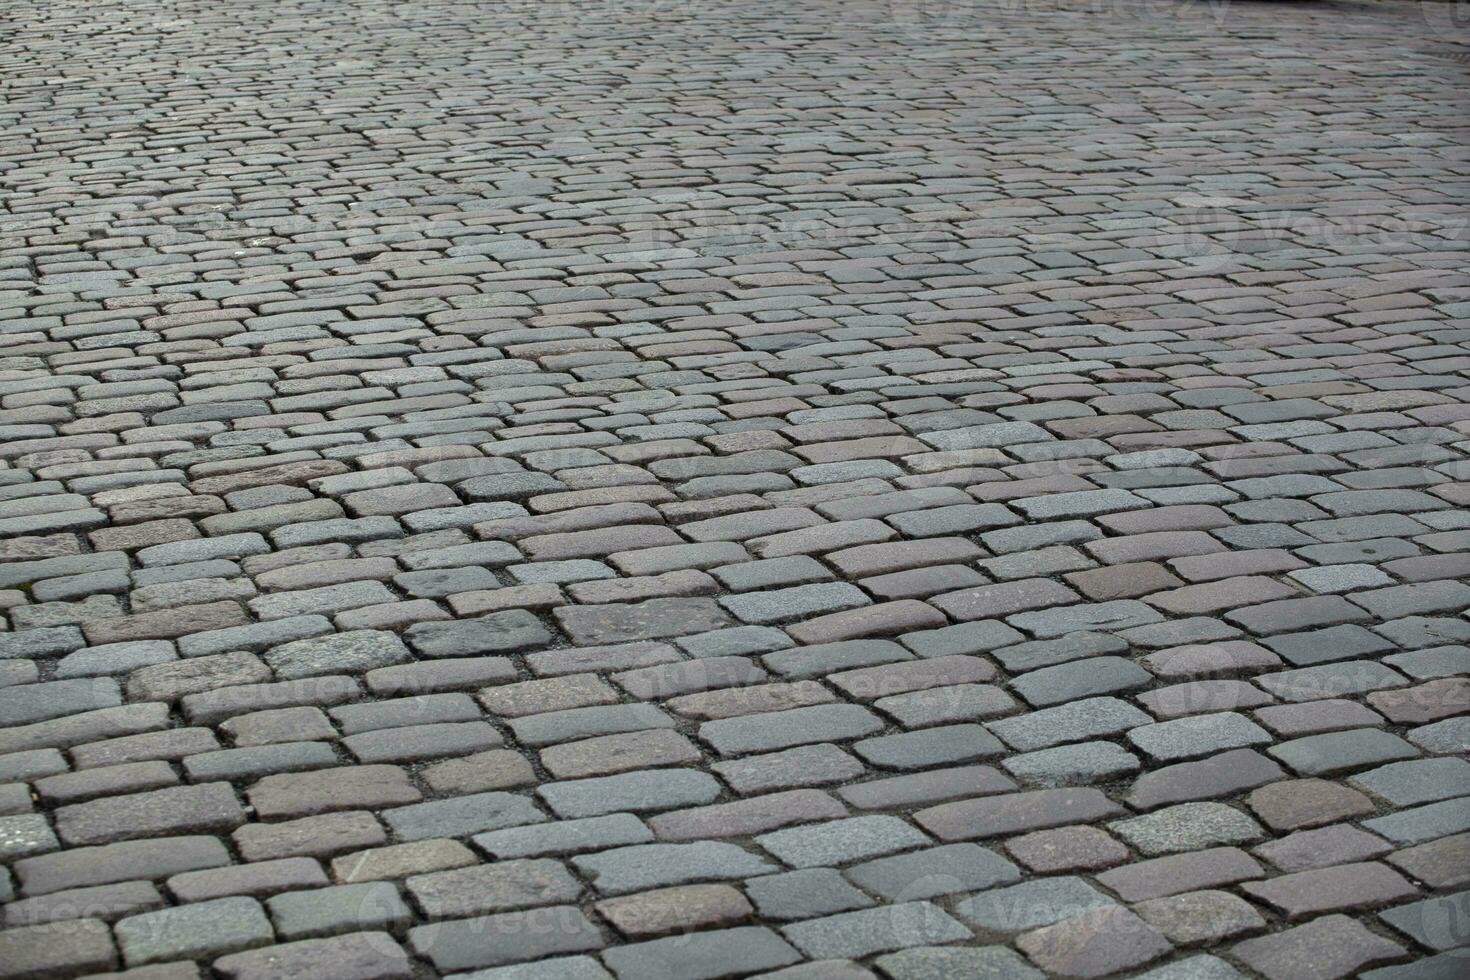 Street sidewalk texture in tile. Gray rectangular tile in perspective. Background. Horizontal. photo